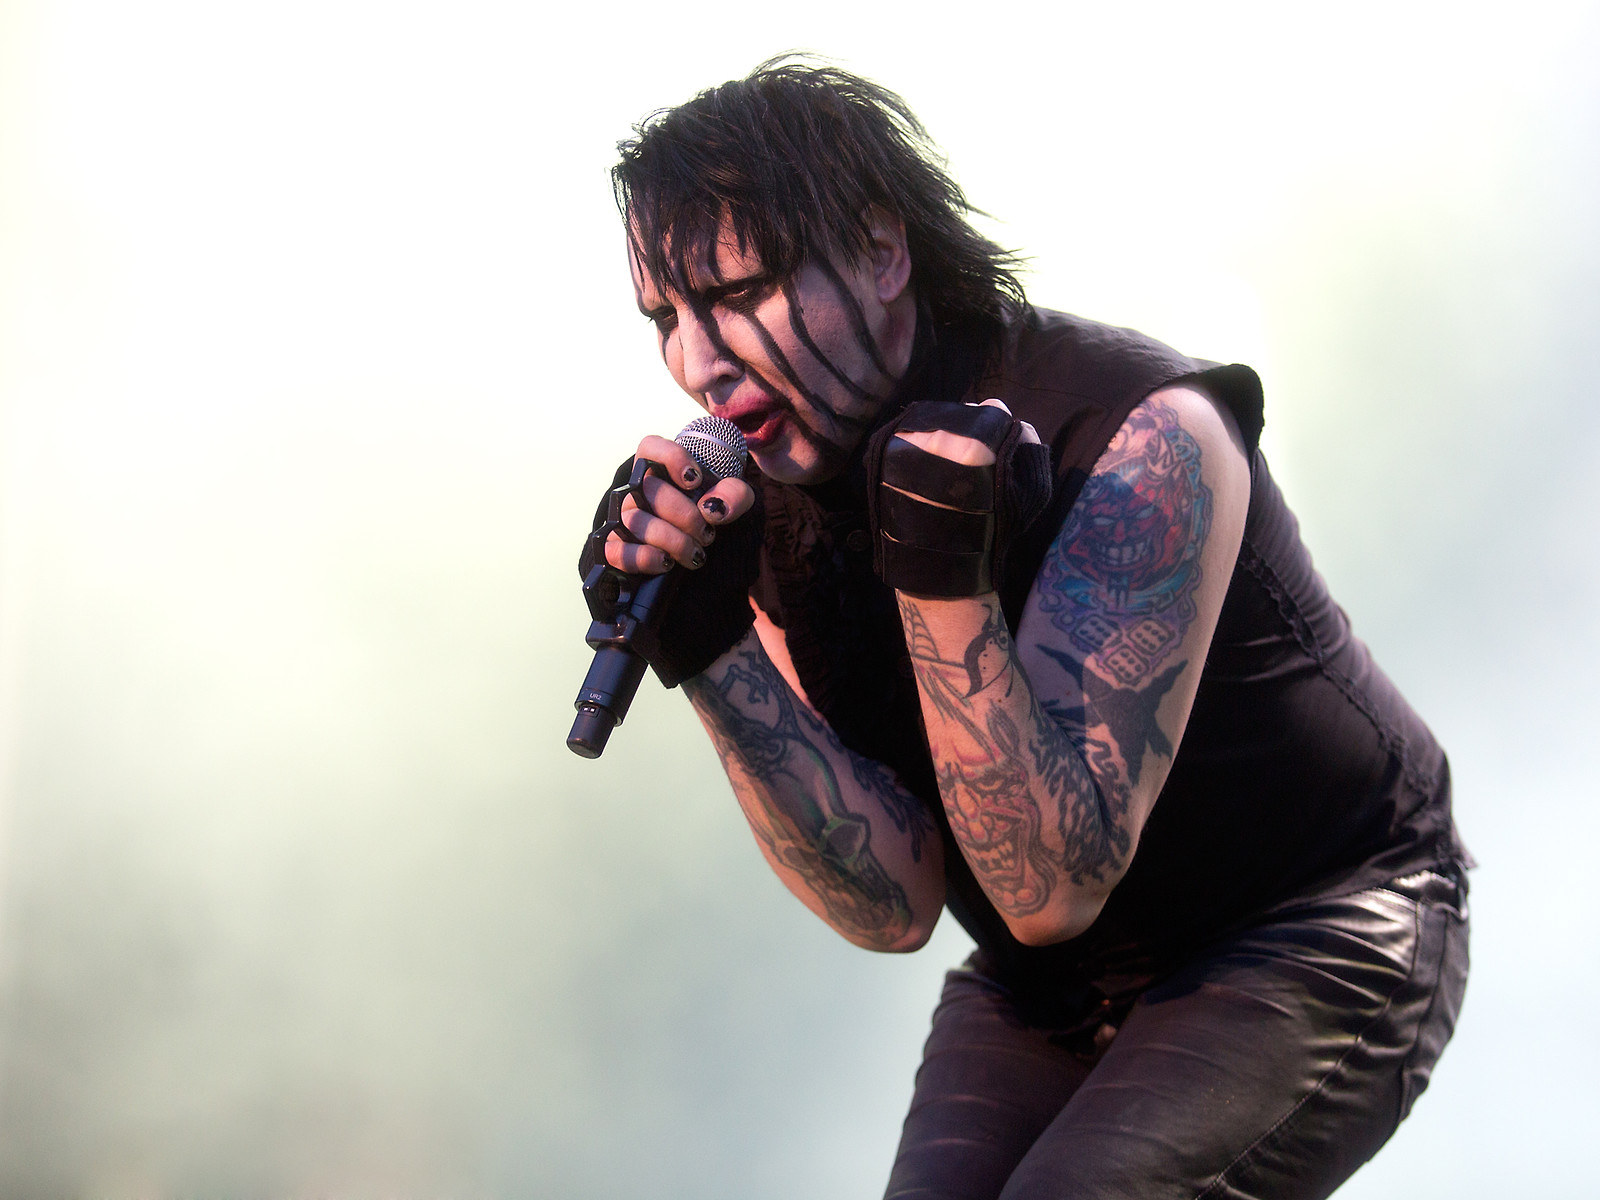 Marilyn Manson @ Heavy TO 2012